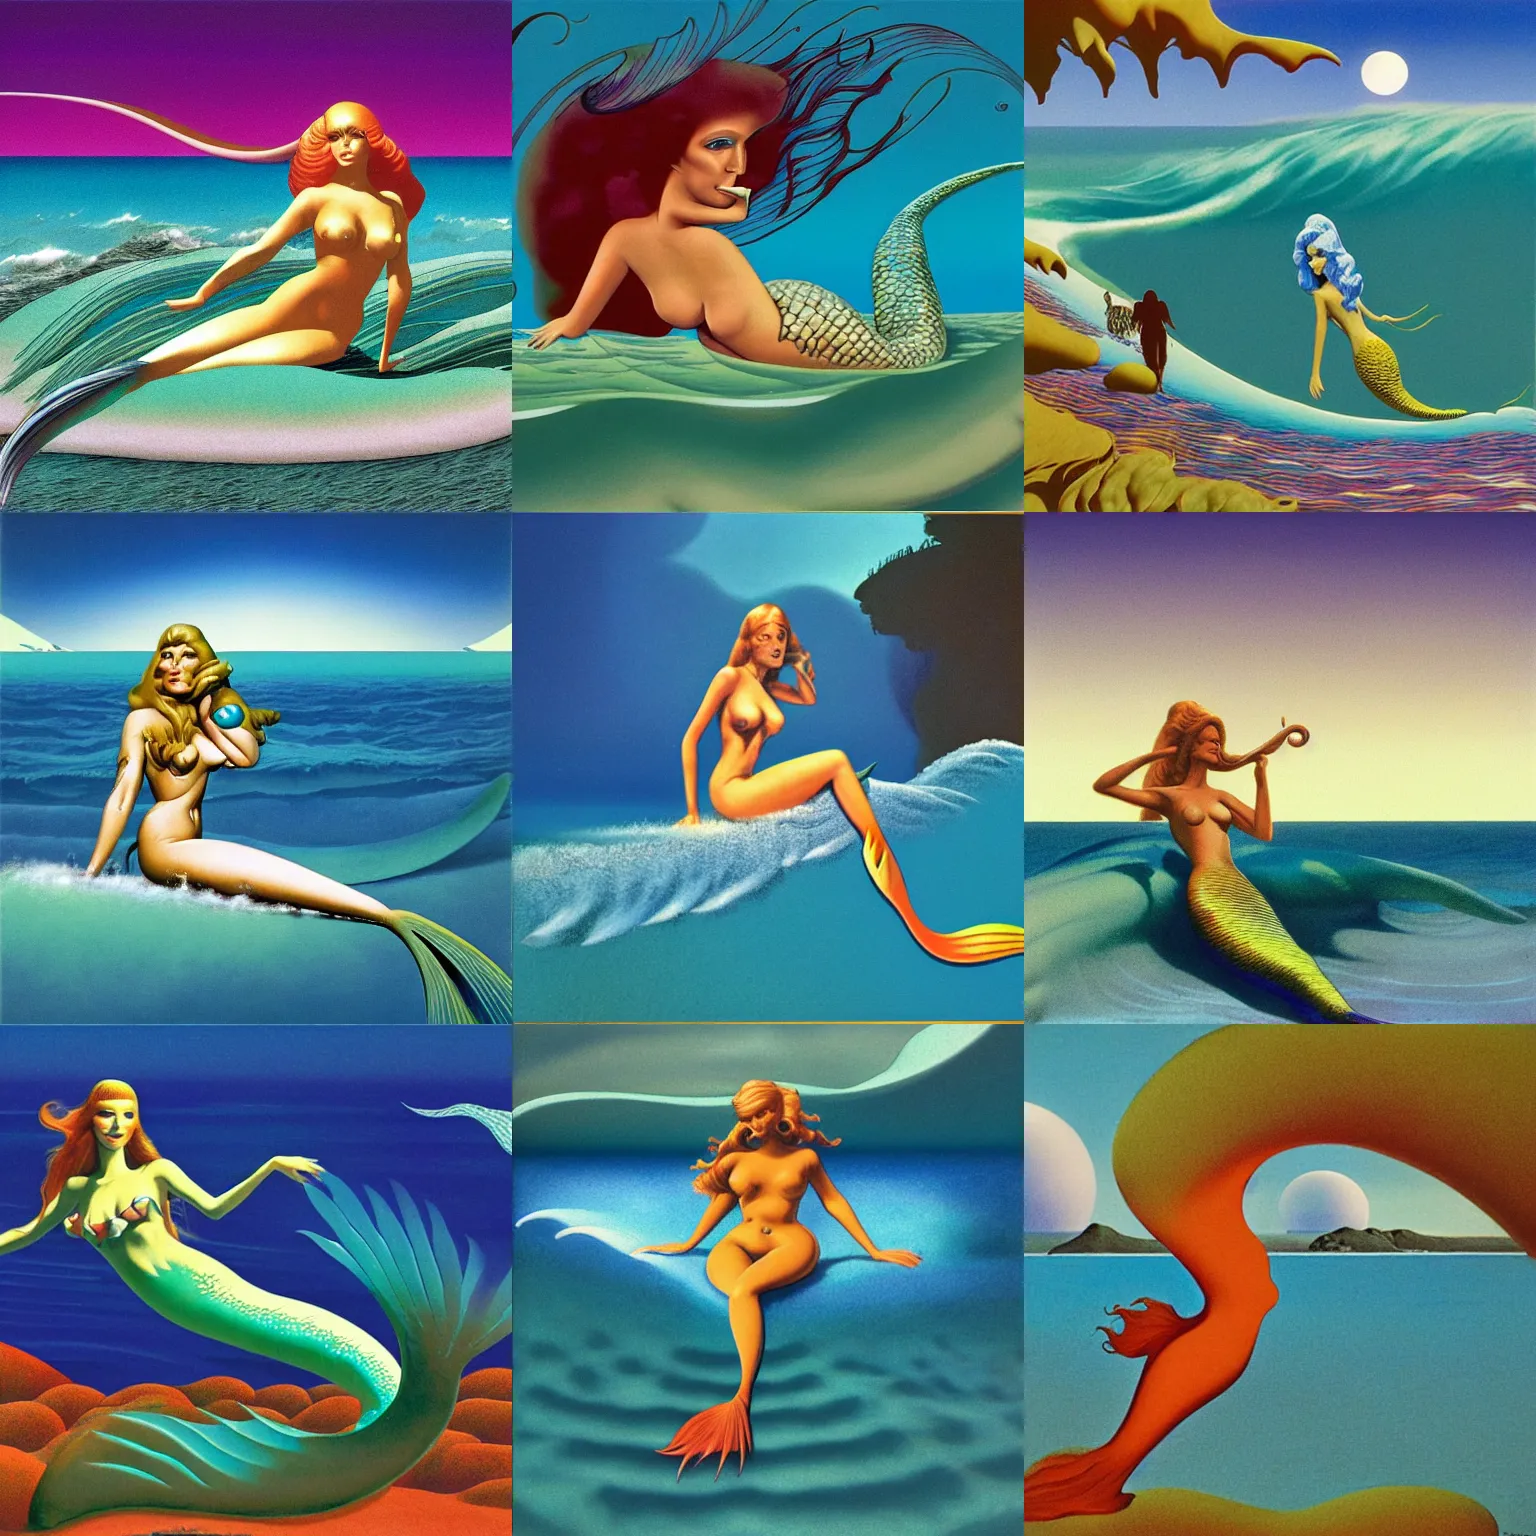 Prompt: Mermaid on a Wave by Roger Dean, Album art, 1970s, 4k